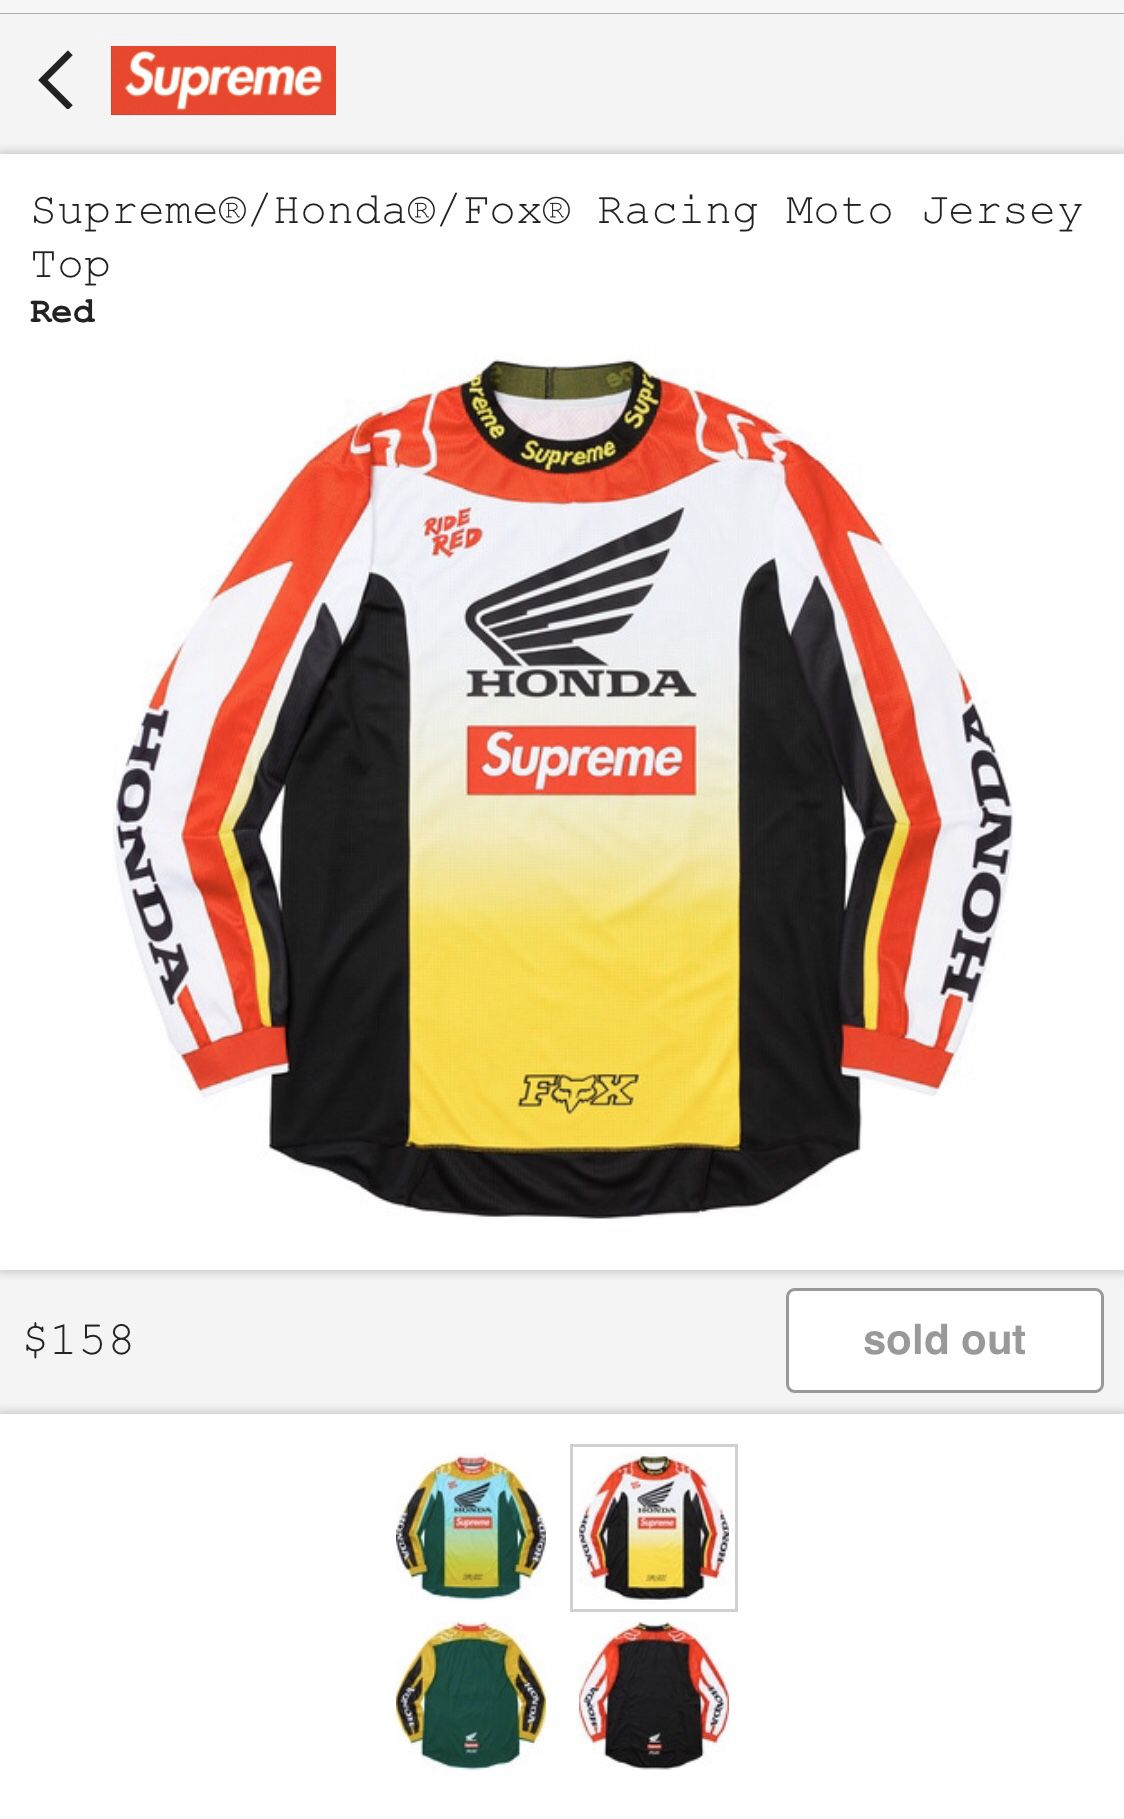 Supreme / Honda / Fox Racing Moto Jersey Top